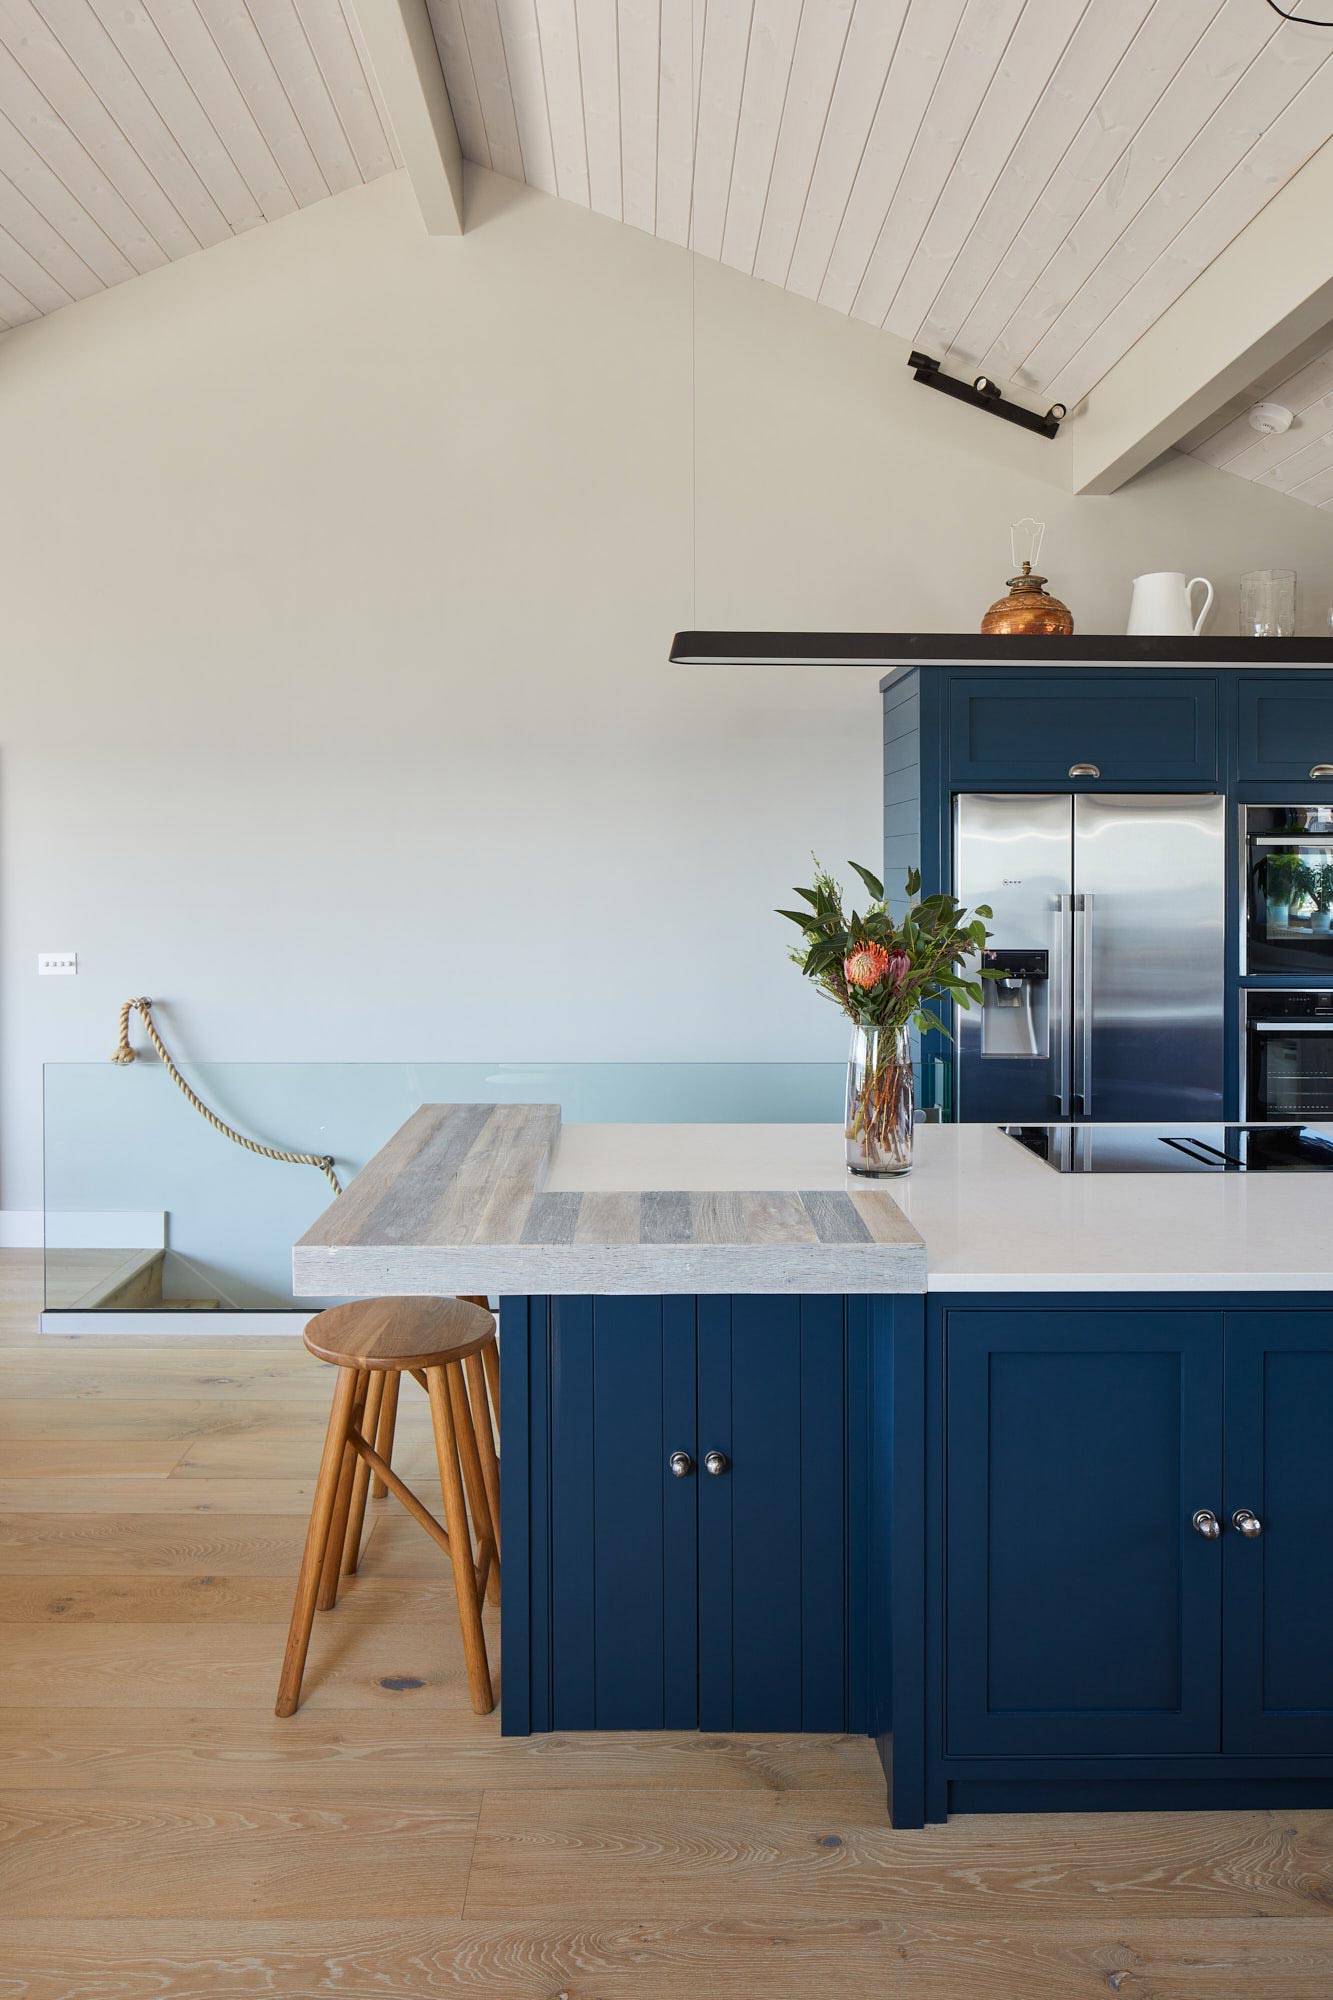 Bespoke blue kitchen island with two oak bar stools